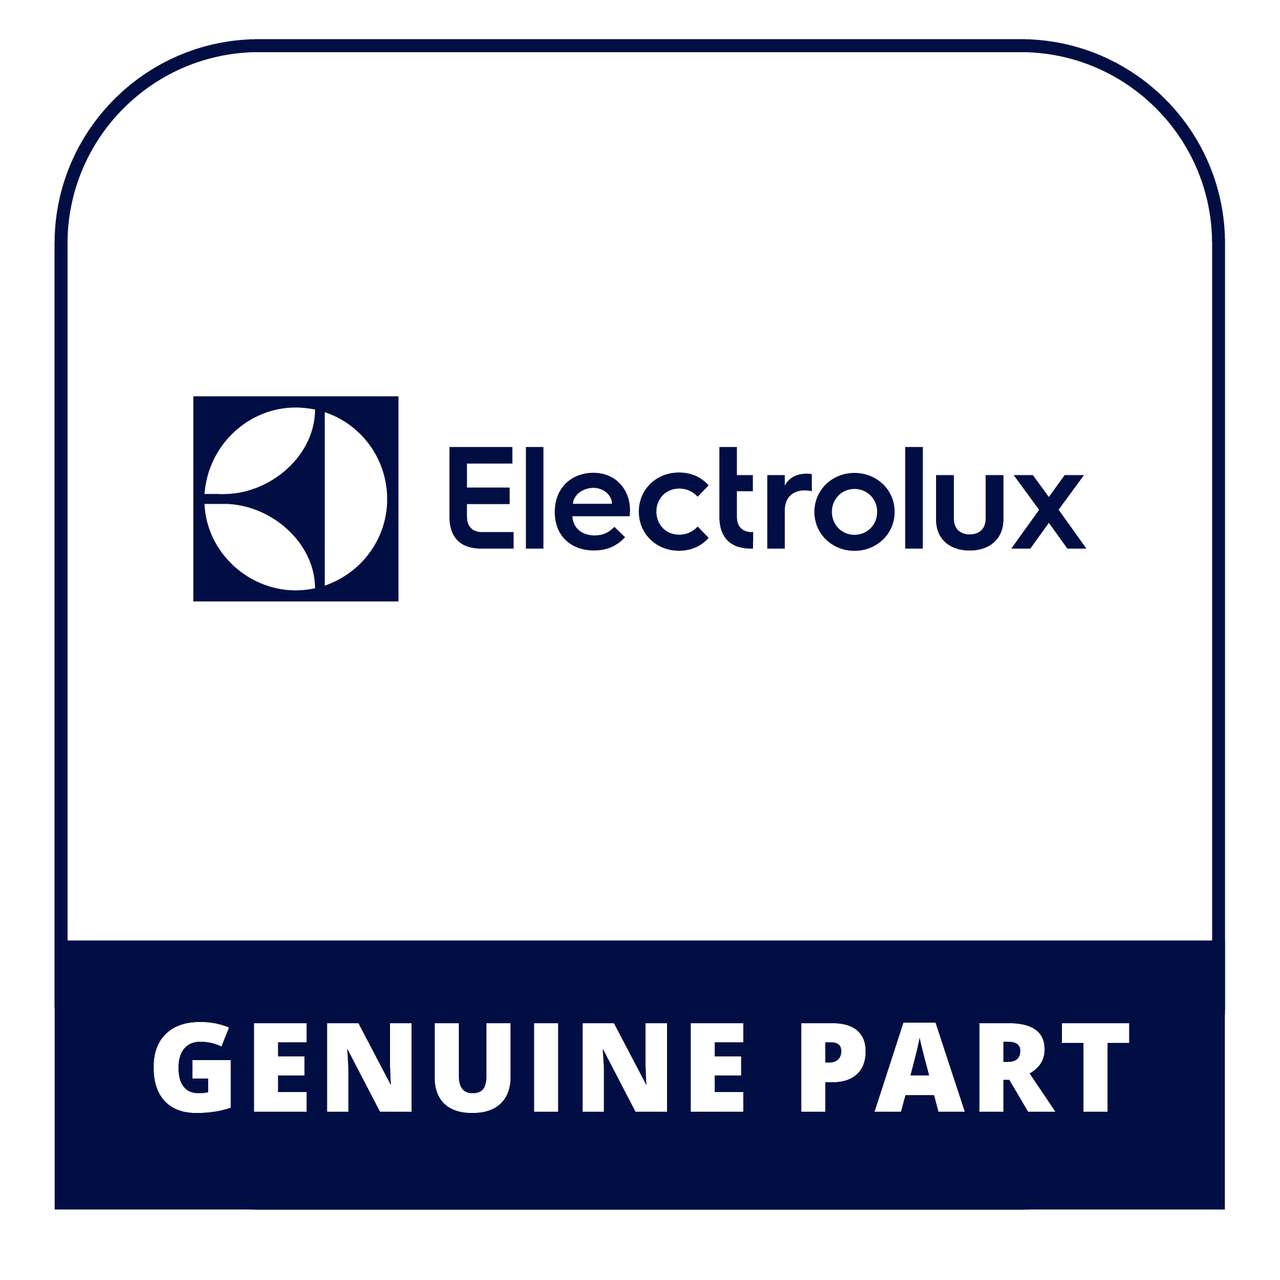 Frigidaire - Electrolux 318905701 Panel - Genuine Electrolux Part